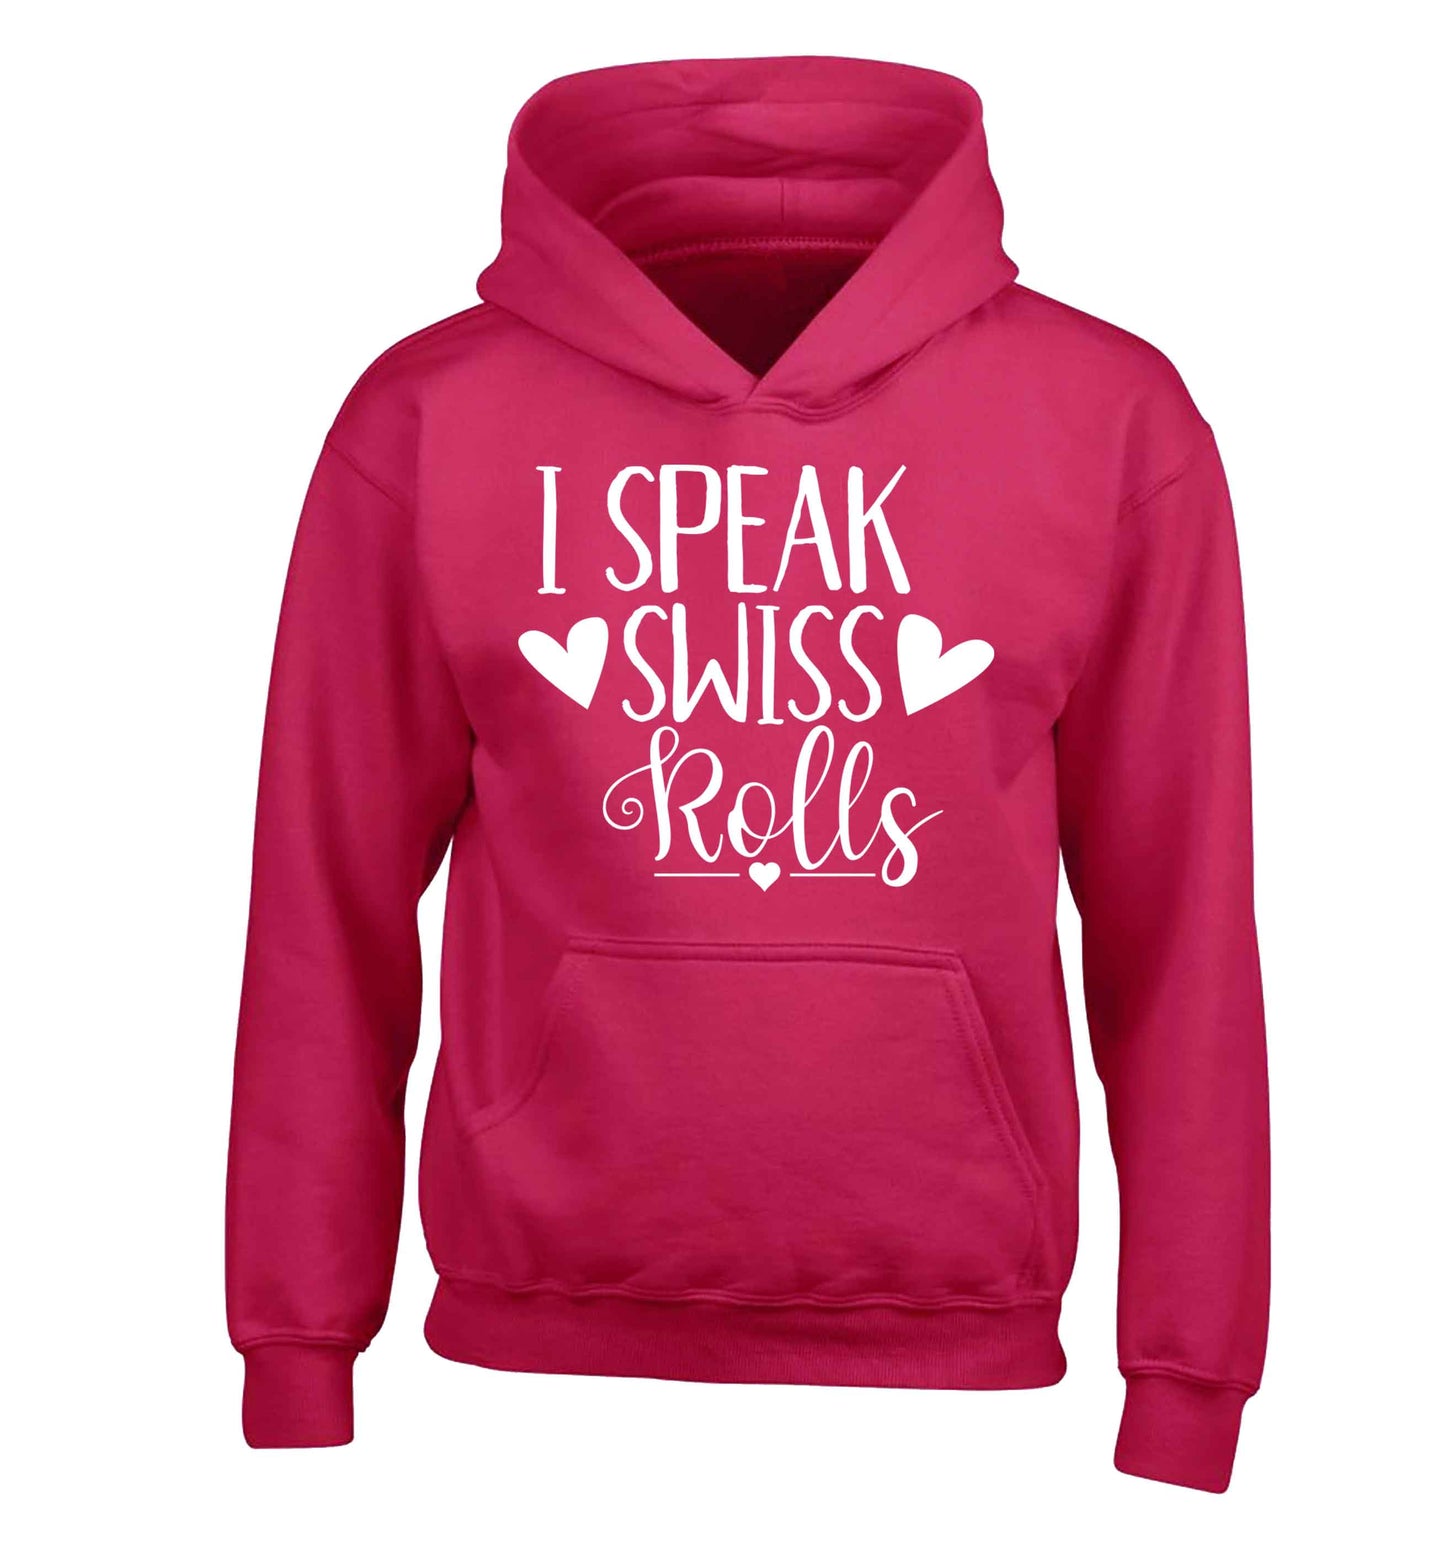 I speak swiss..rolls children's pink hoodie 12-13 Years